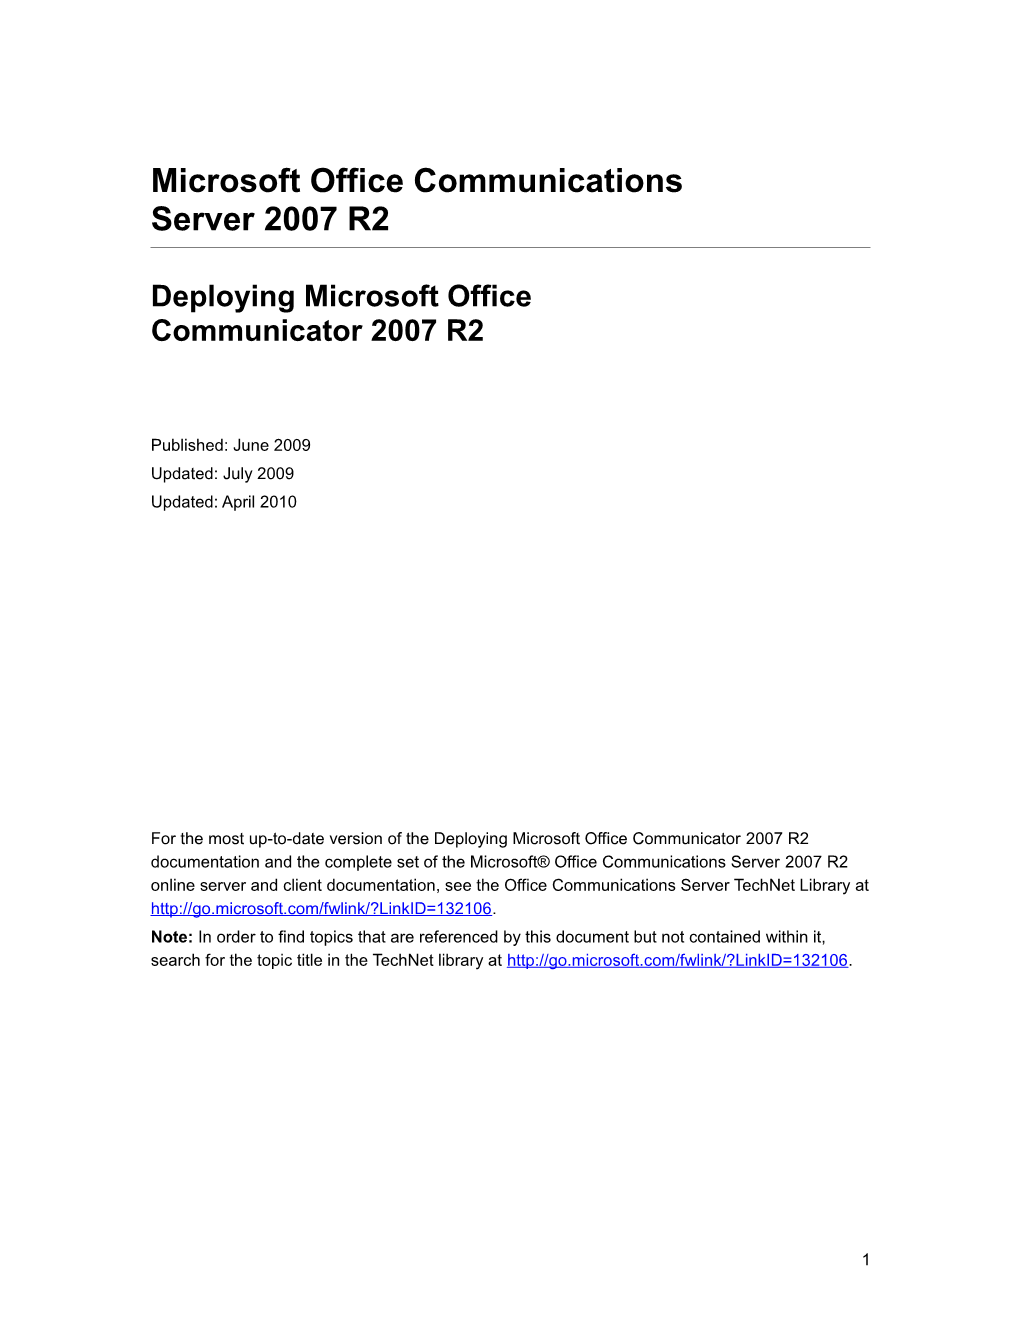 Microsoft Office Communications Server2007r2